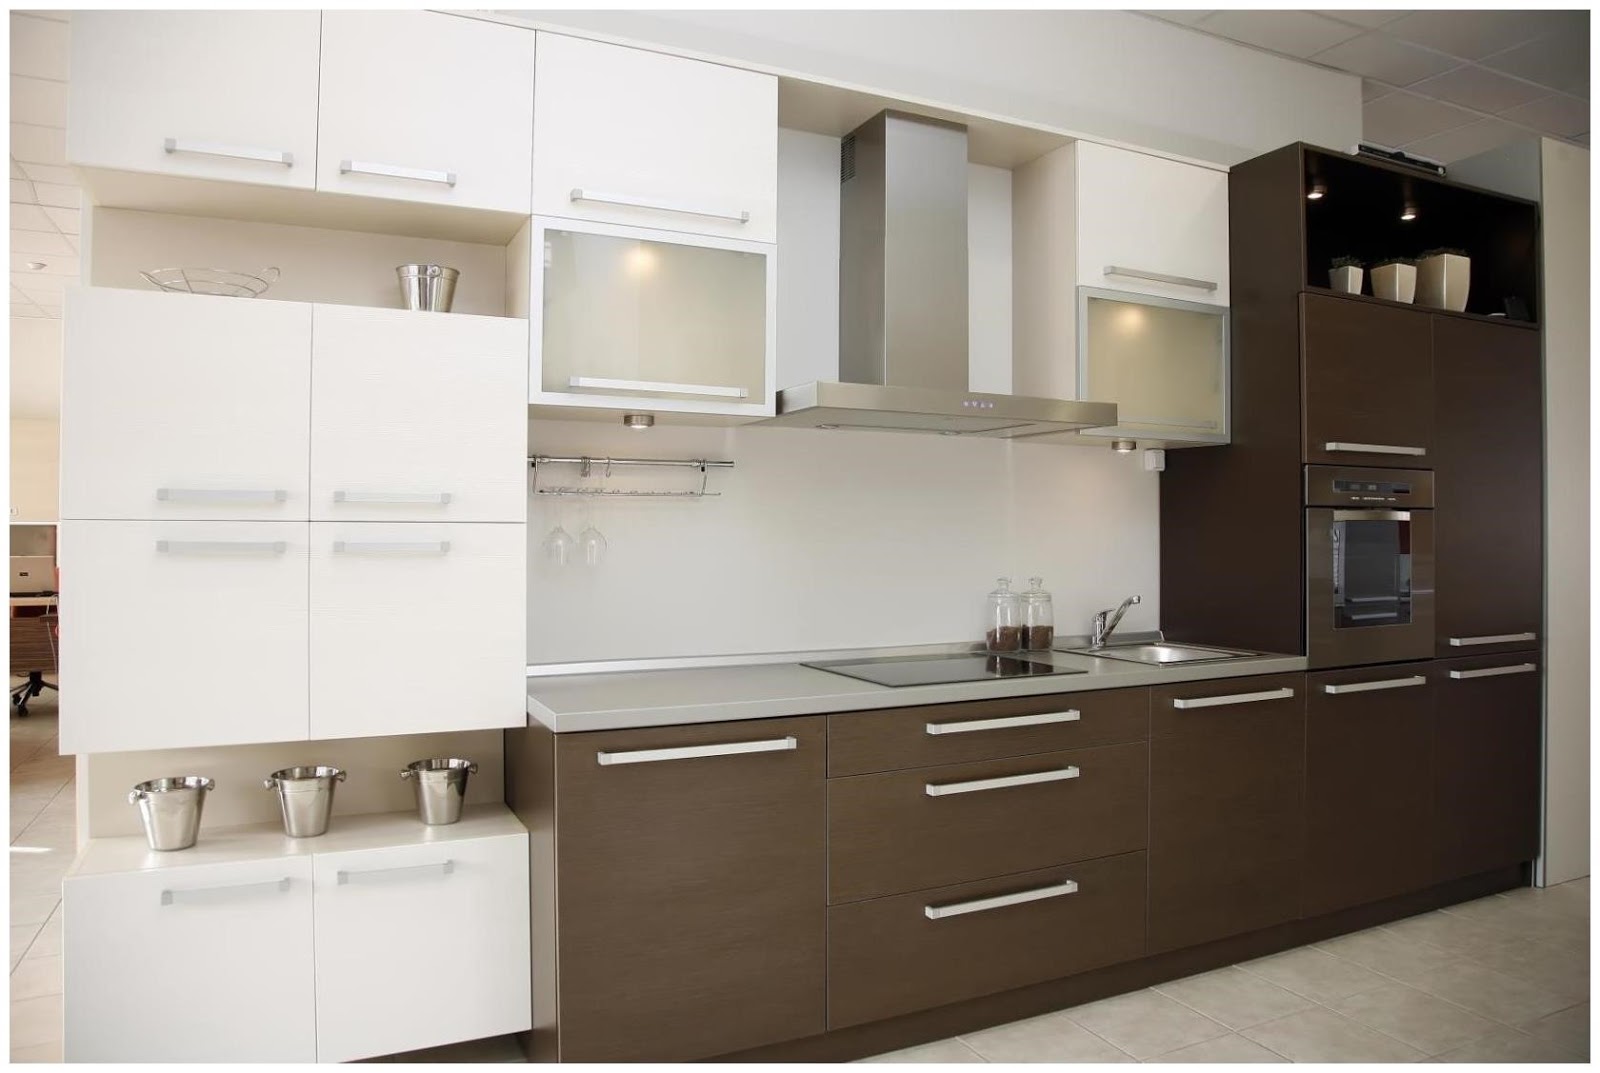 16 New Design Of Modular Kitchen Indian Modular Kitchen Design L Shape New,Design,Of,Modular,Kitchen